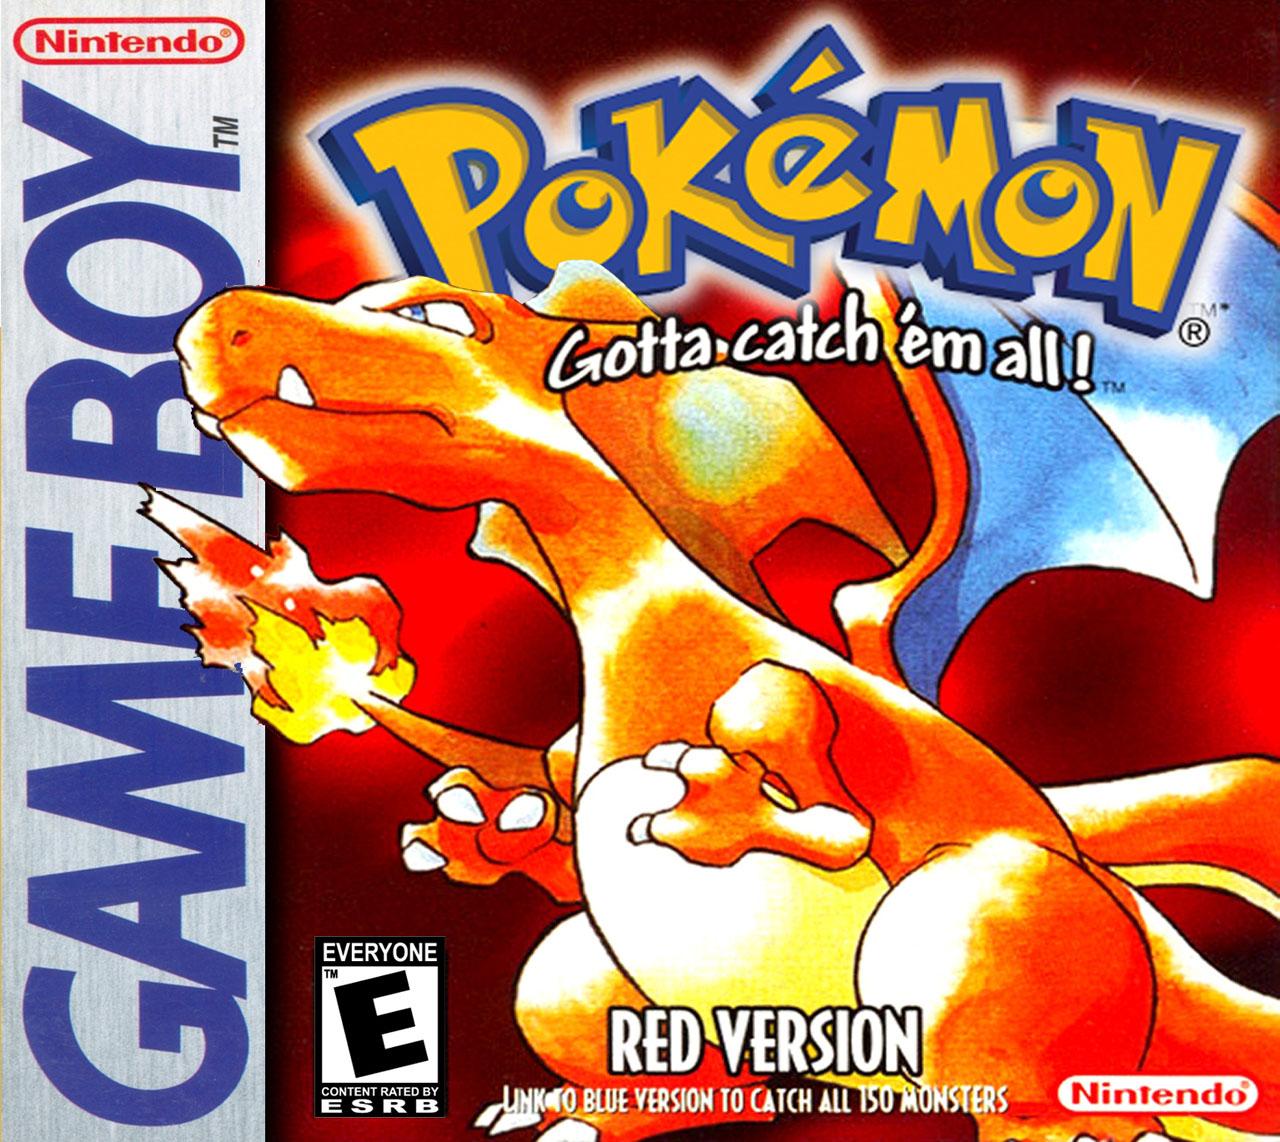 Pokemon Red on Gameboy